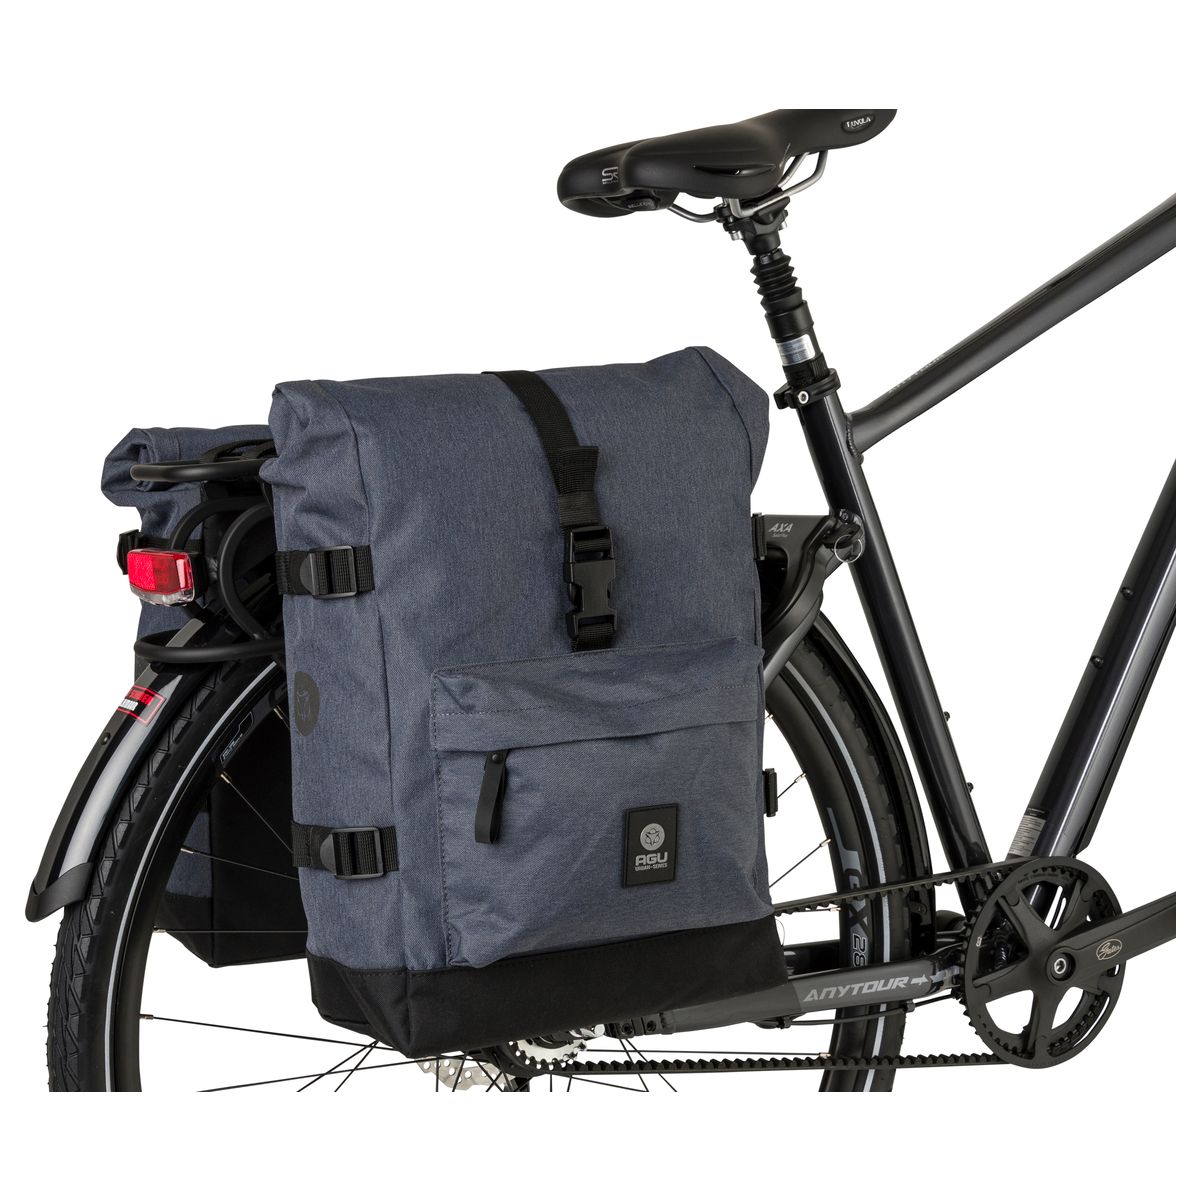 H2O Roll-Top Double Bike Bag II Urban fit example